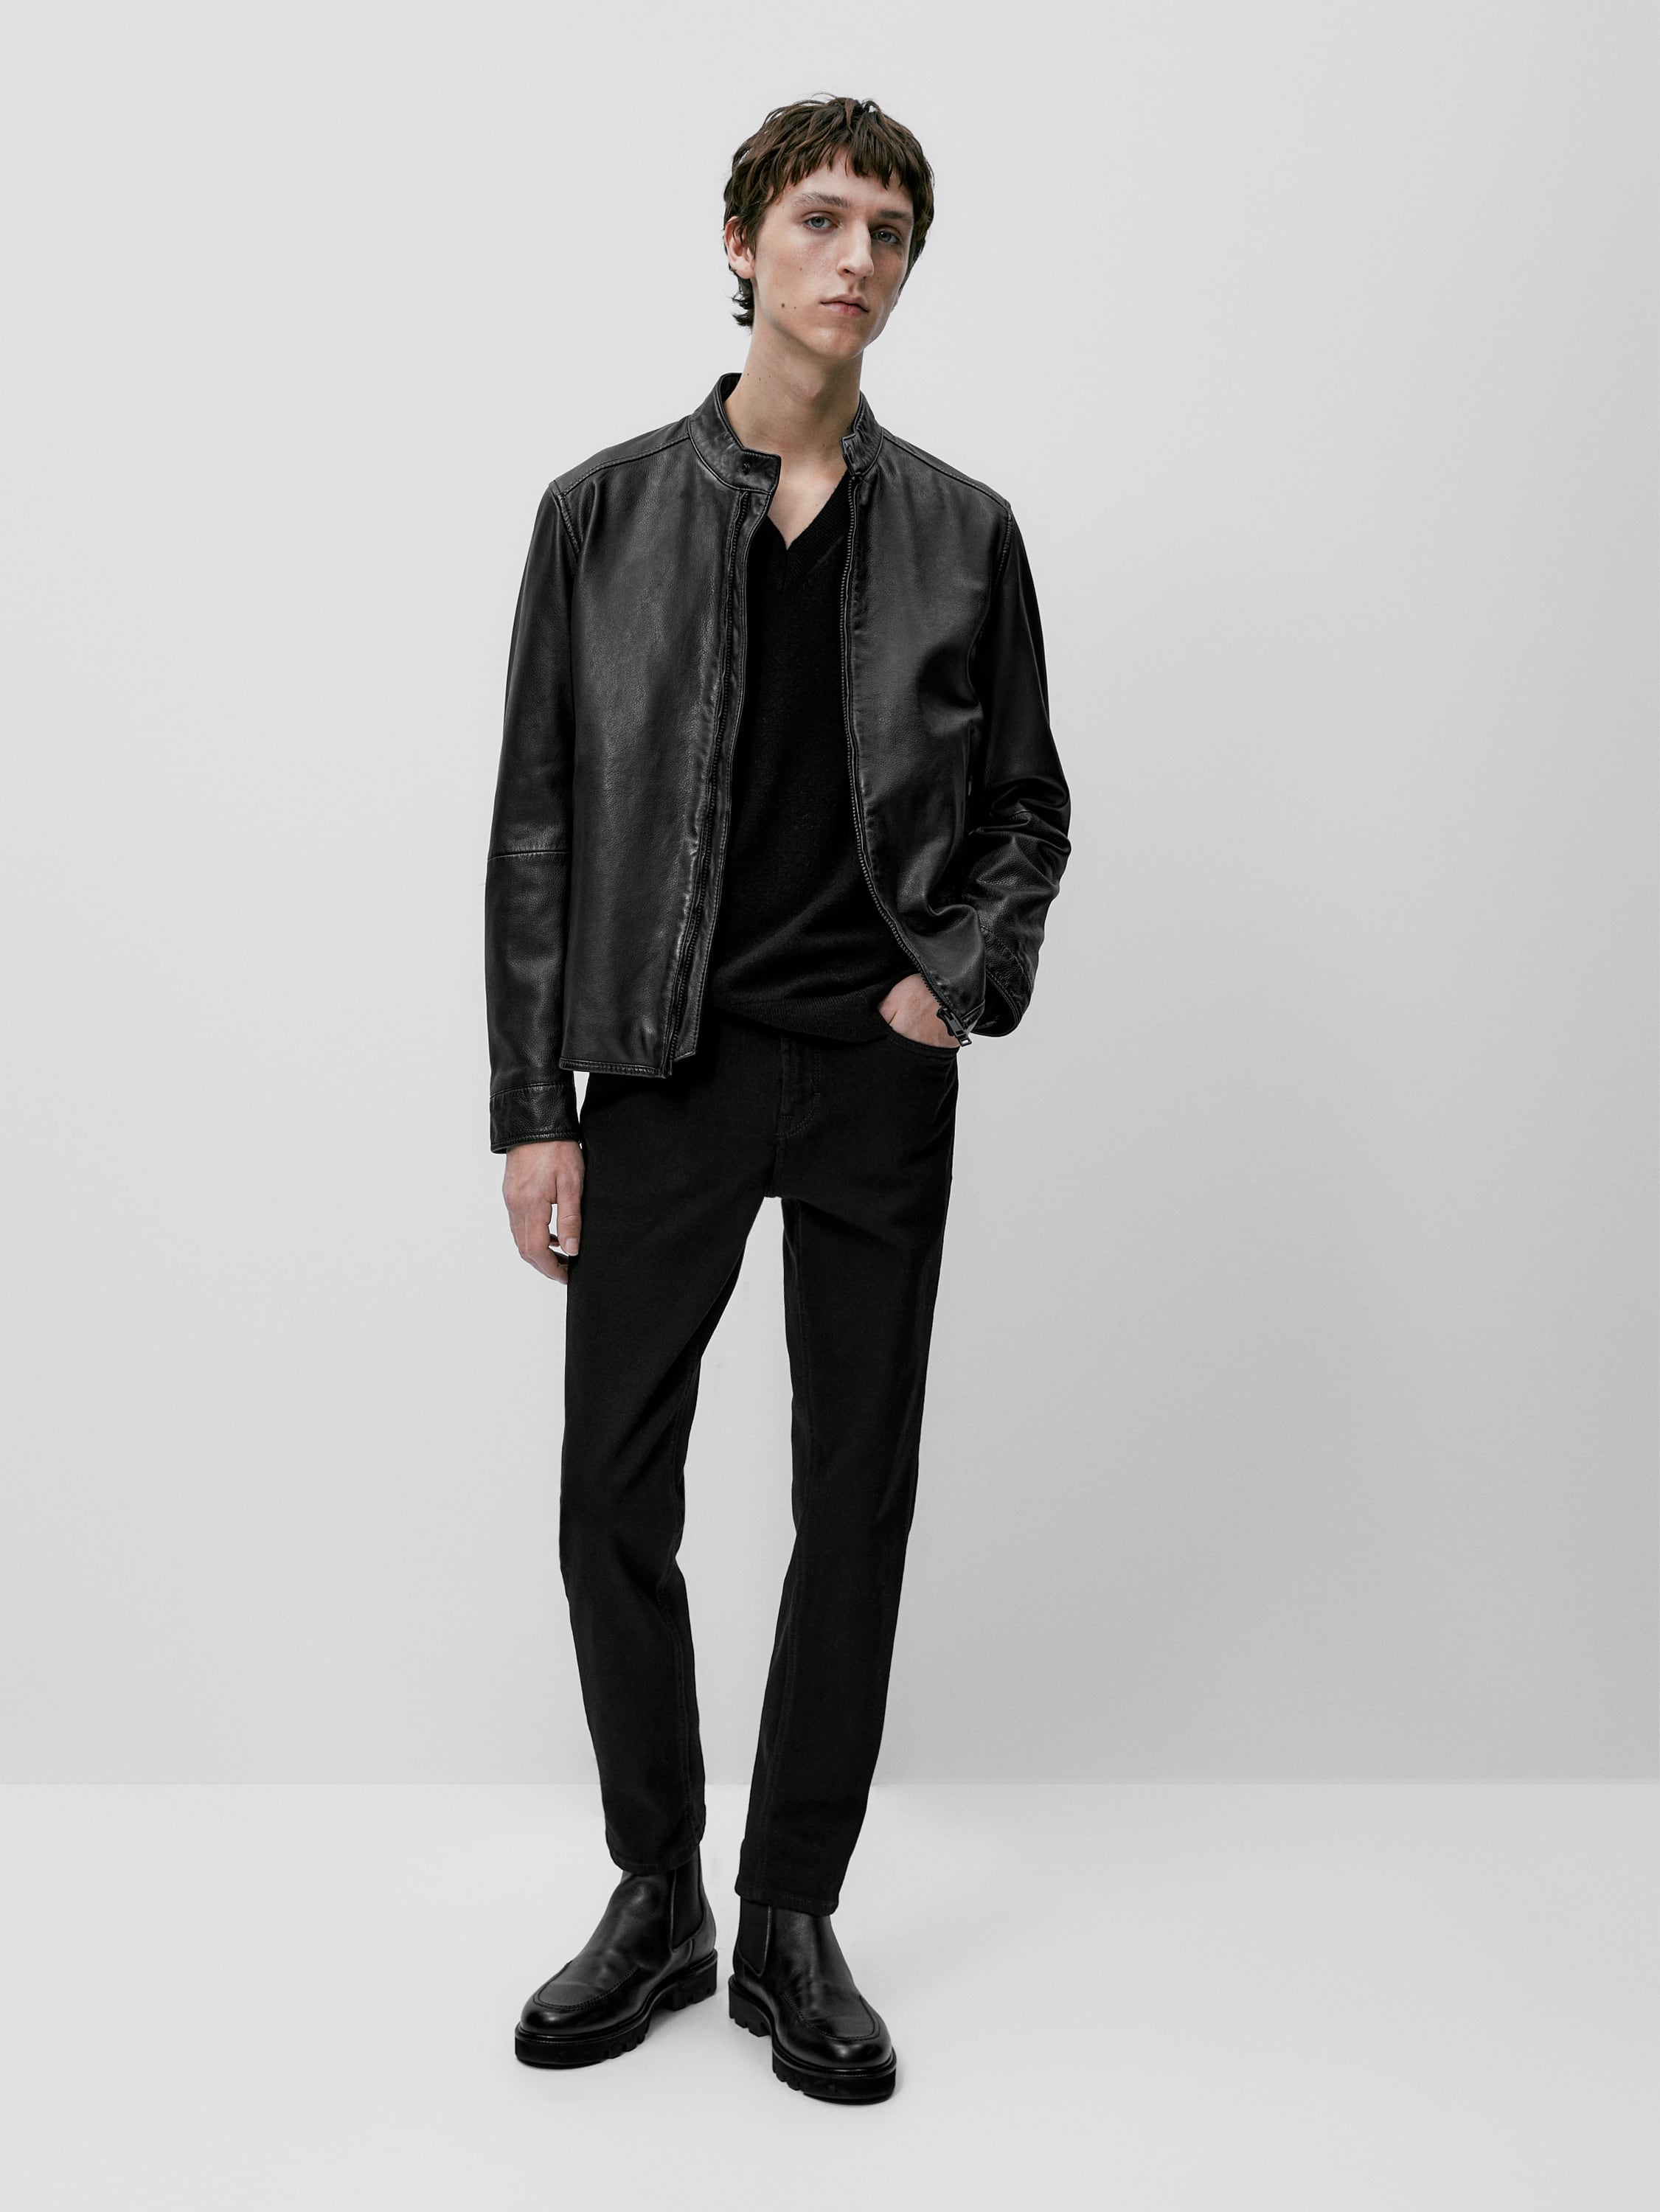 Black nappa leather jacket